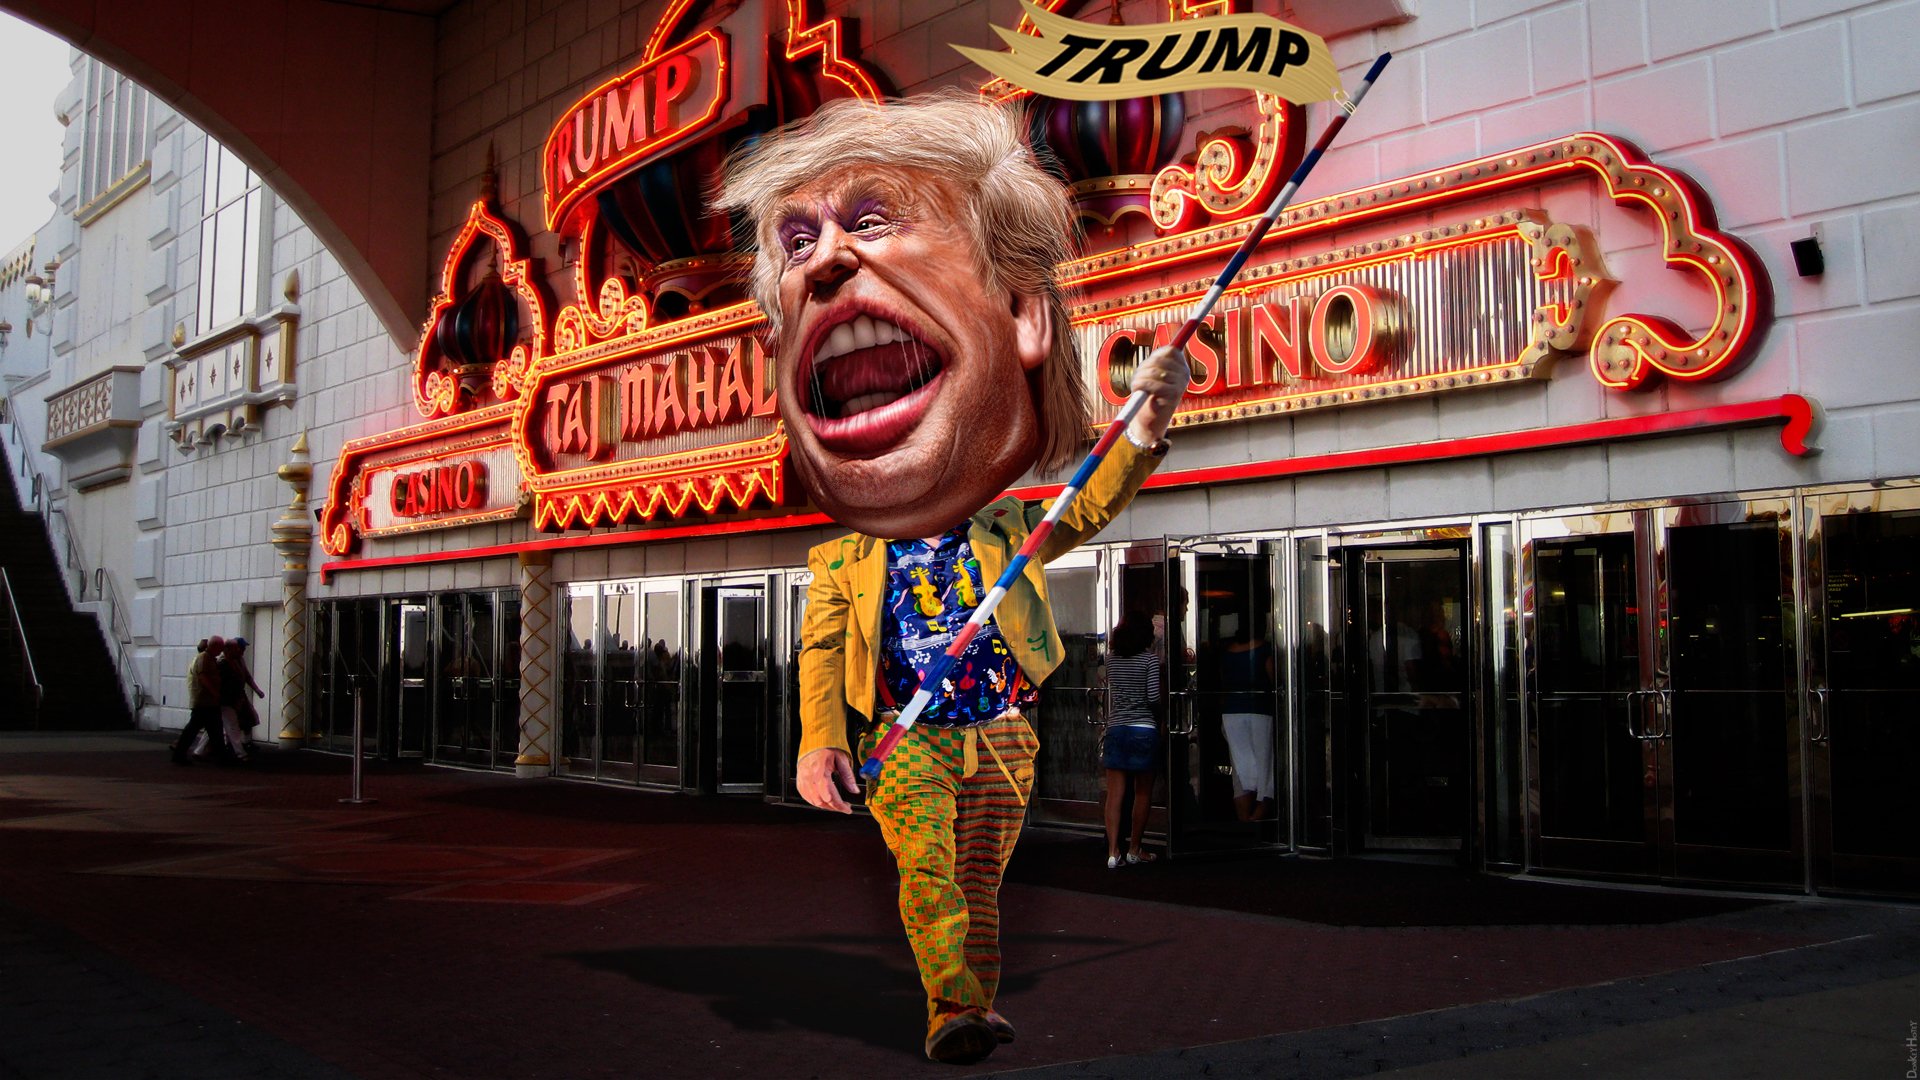 Donald_Trump_Drum_Major_Clown_1920x1080.jpg